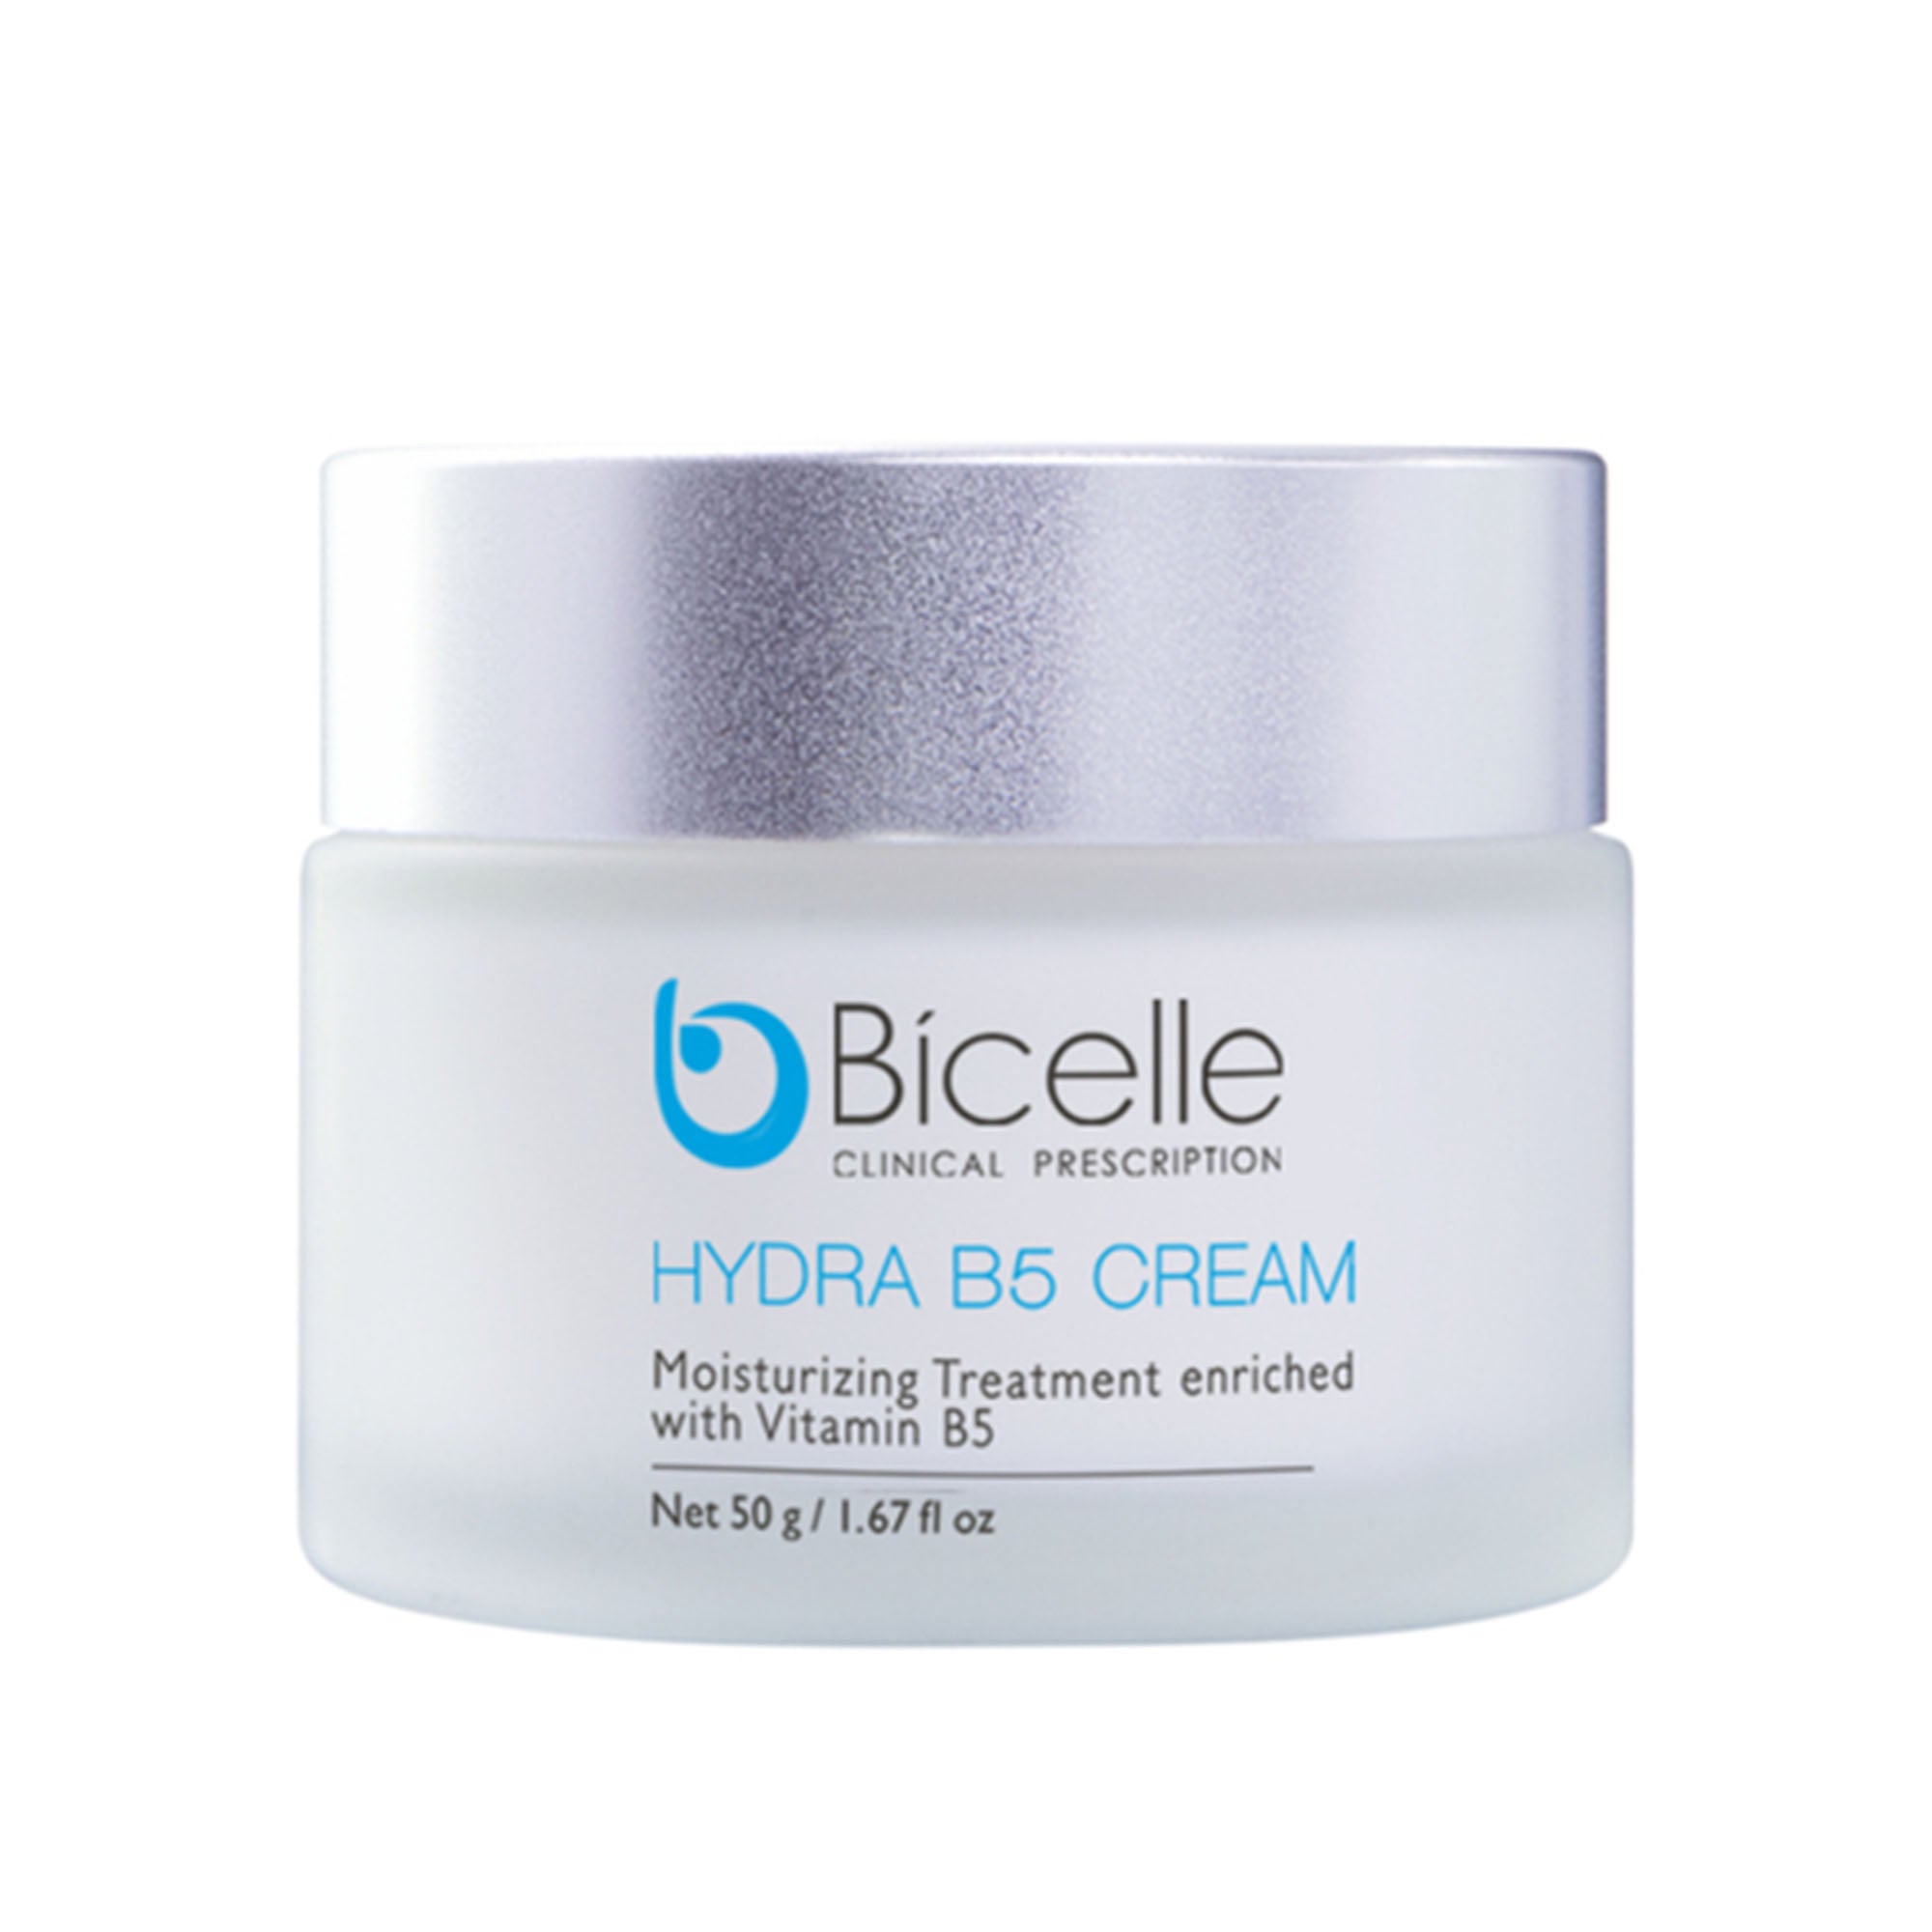 Bicelle Complete Vitamin B5 Moisturizing Cream | HYDRA B5 CREAM 50g